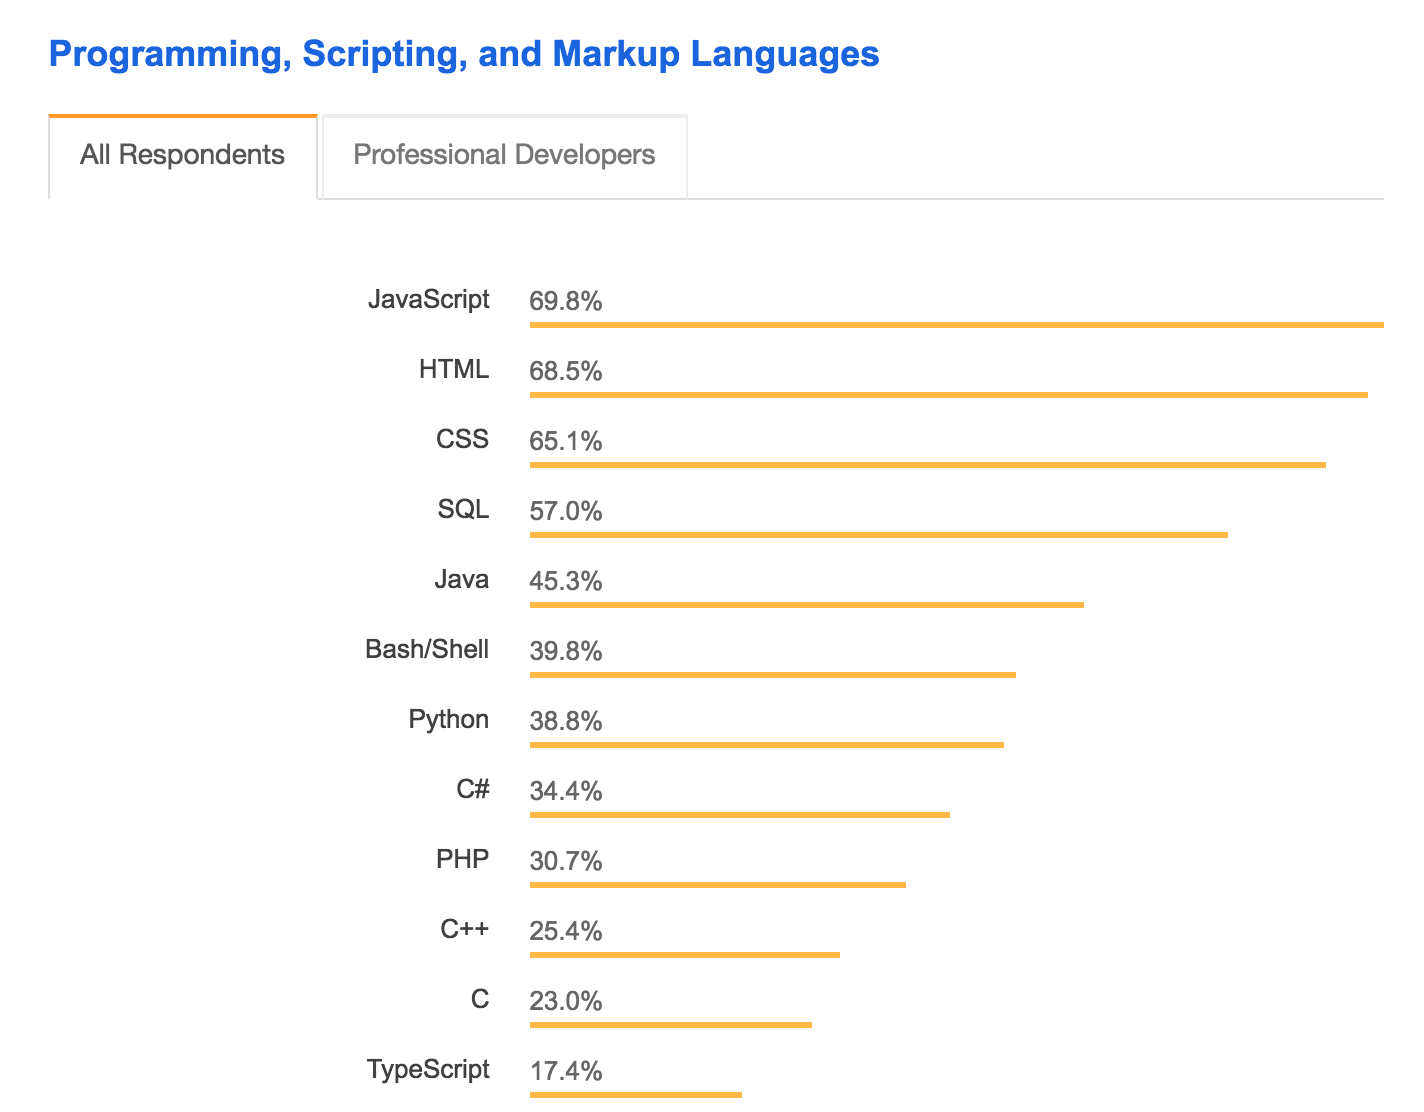 Javascript is the most popular language